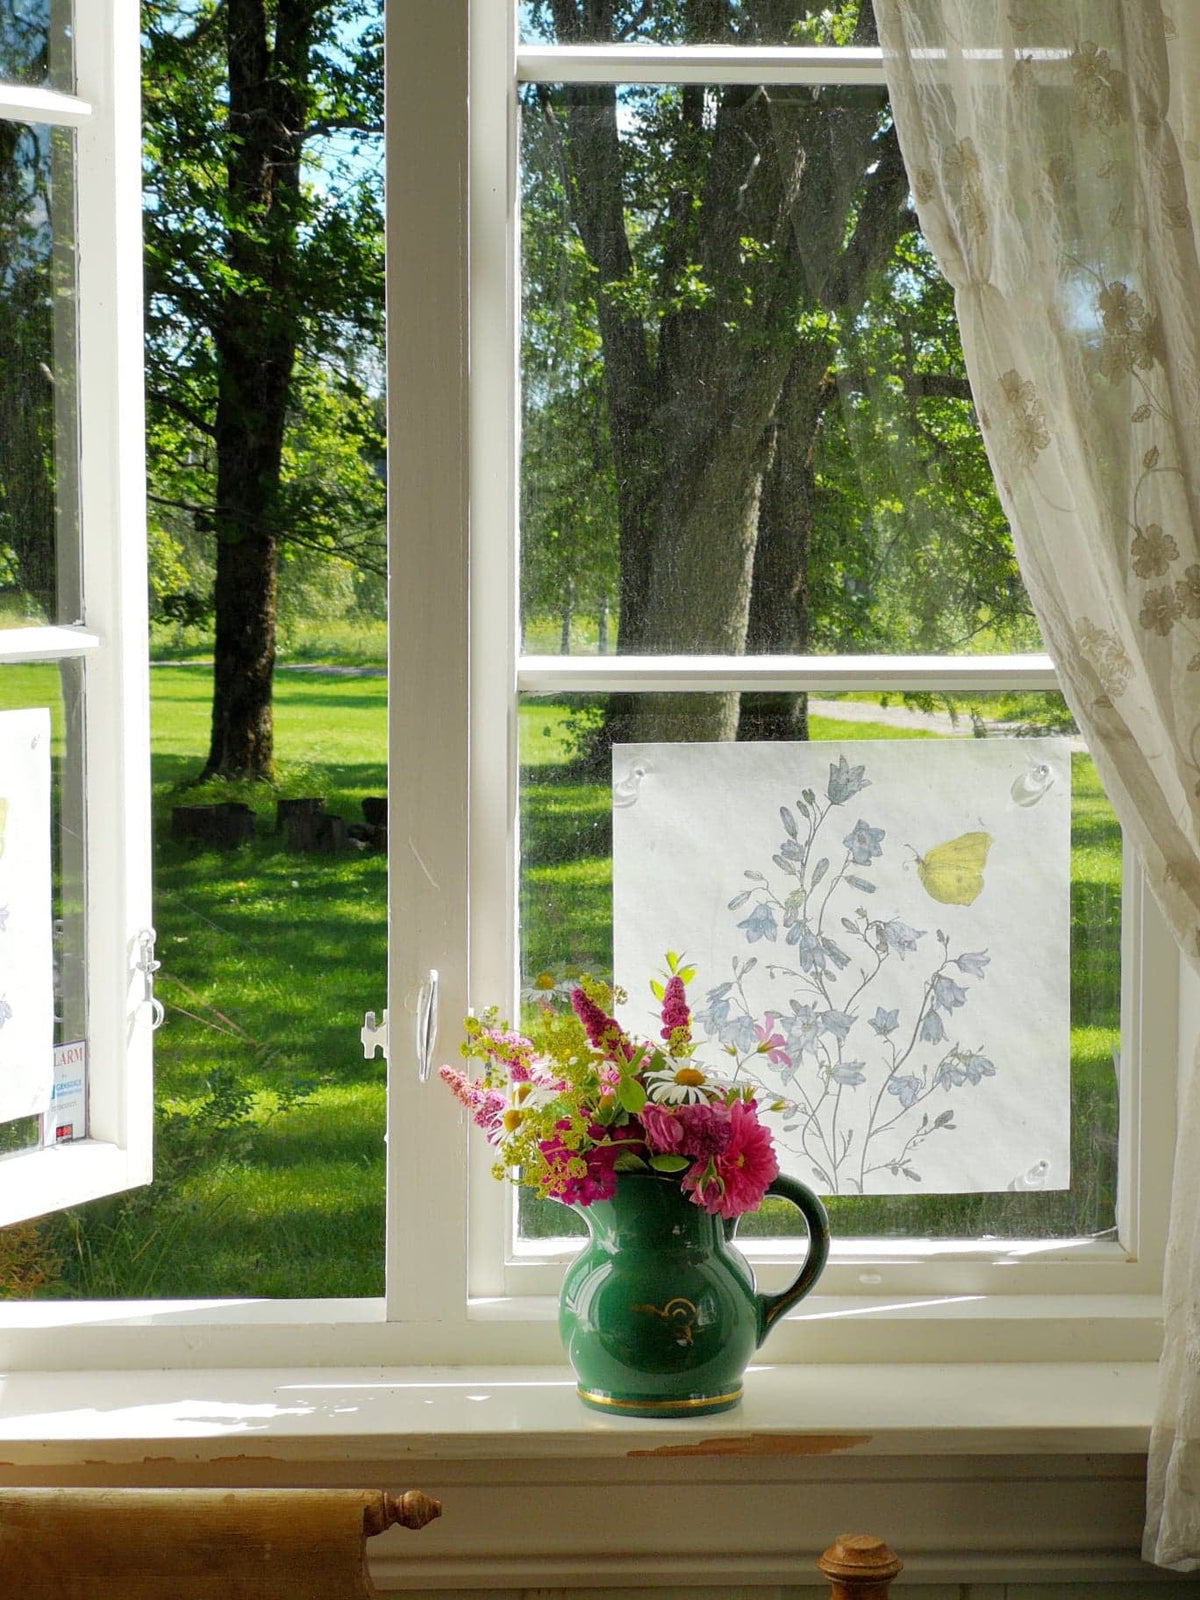 Emma Sjodin: Windowshade (31 x 31cm), Bellflower